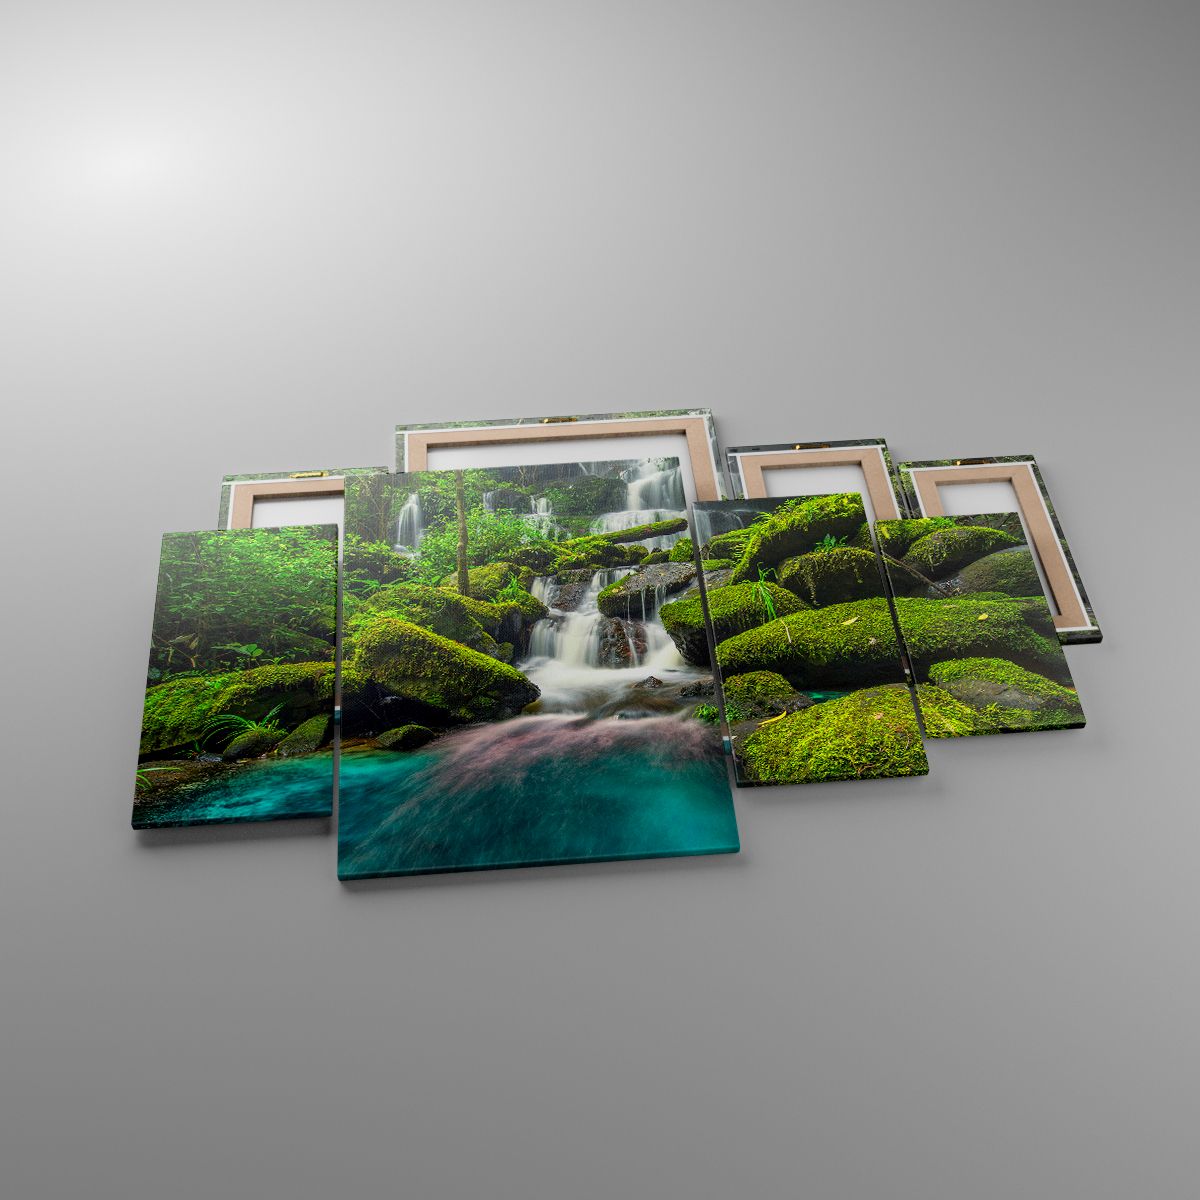 Leinwandbild Landschaft, Leinwandbild Wasserfall, Leinwandbild Gebirgsbach, Leinwandbild Wald, Leinwandbild Natur